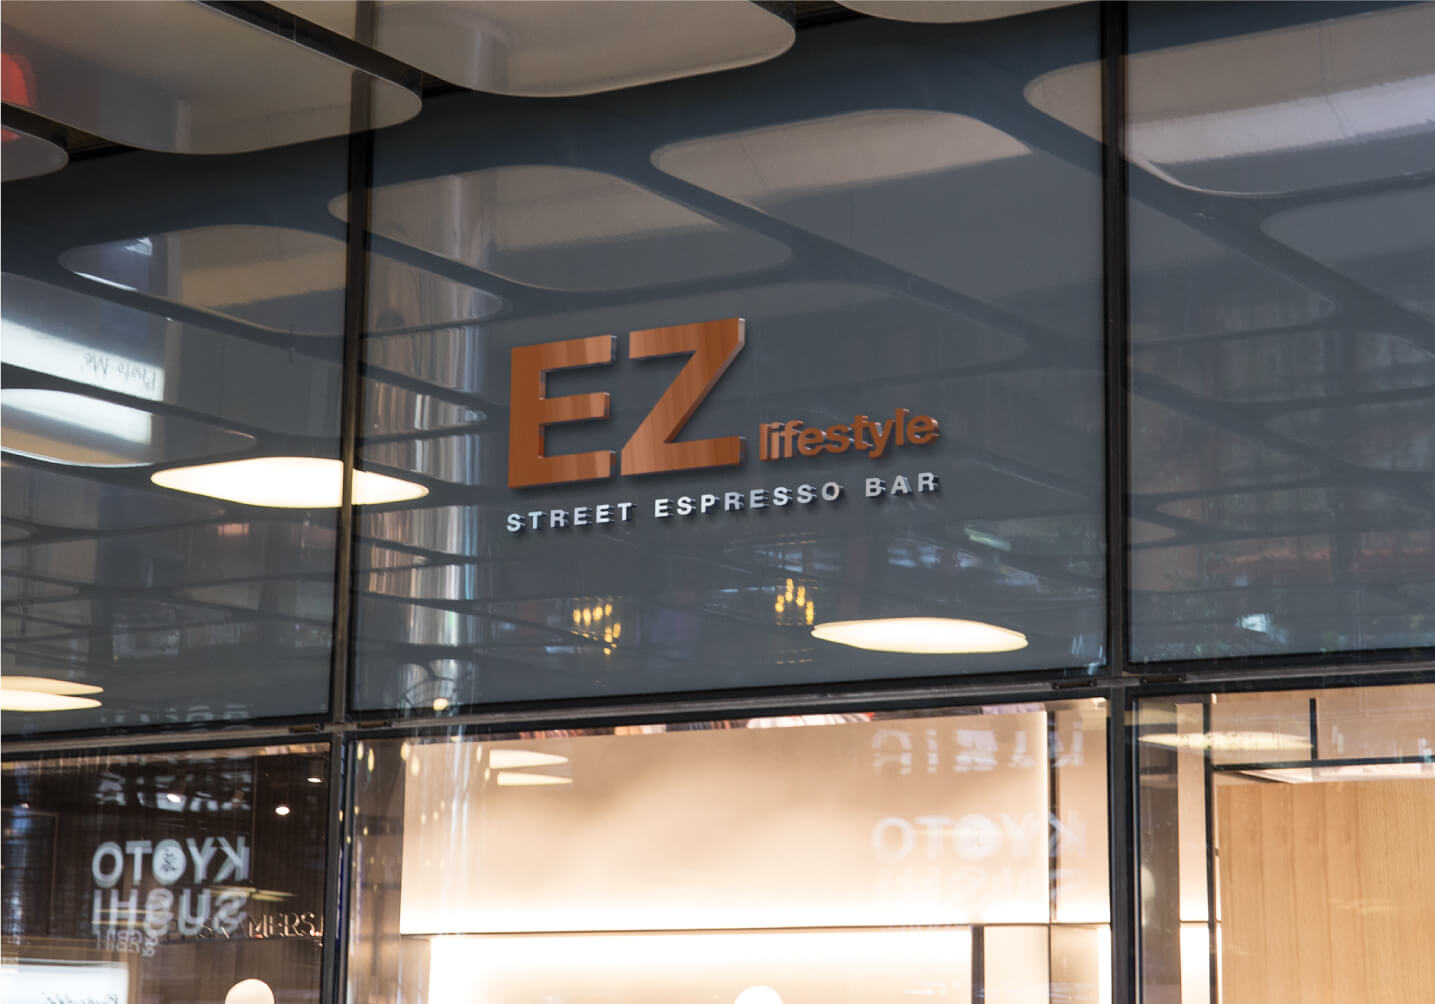 EZ Lifestyle - Street Espresso Bar Logo Design